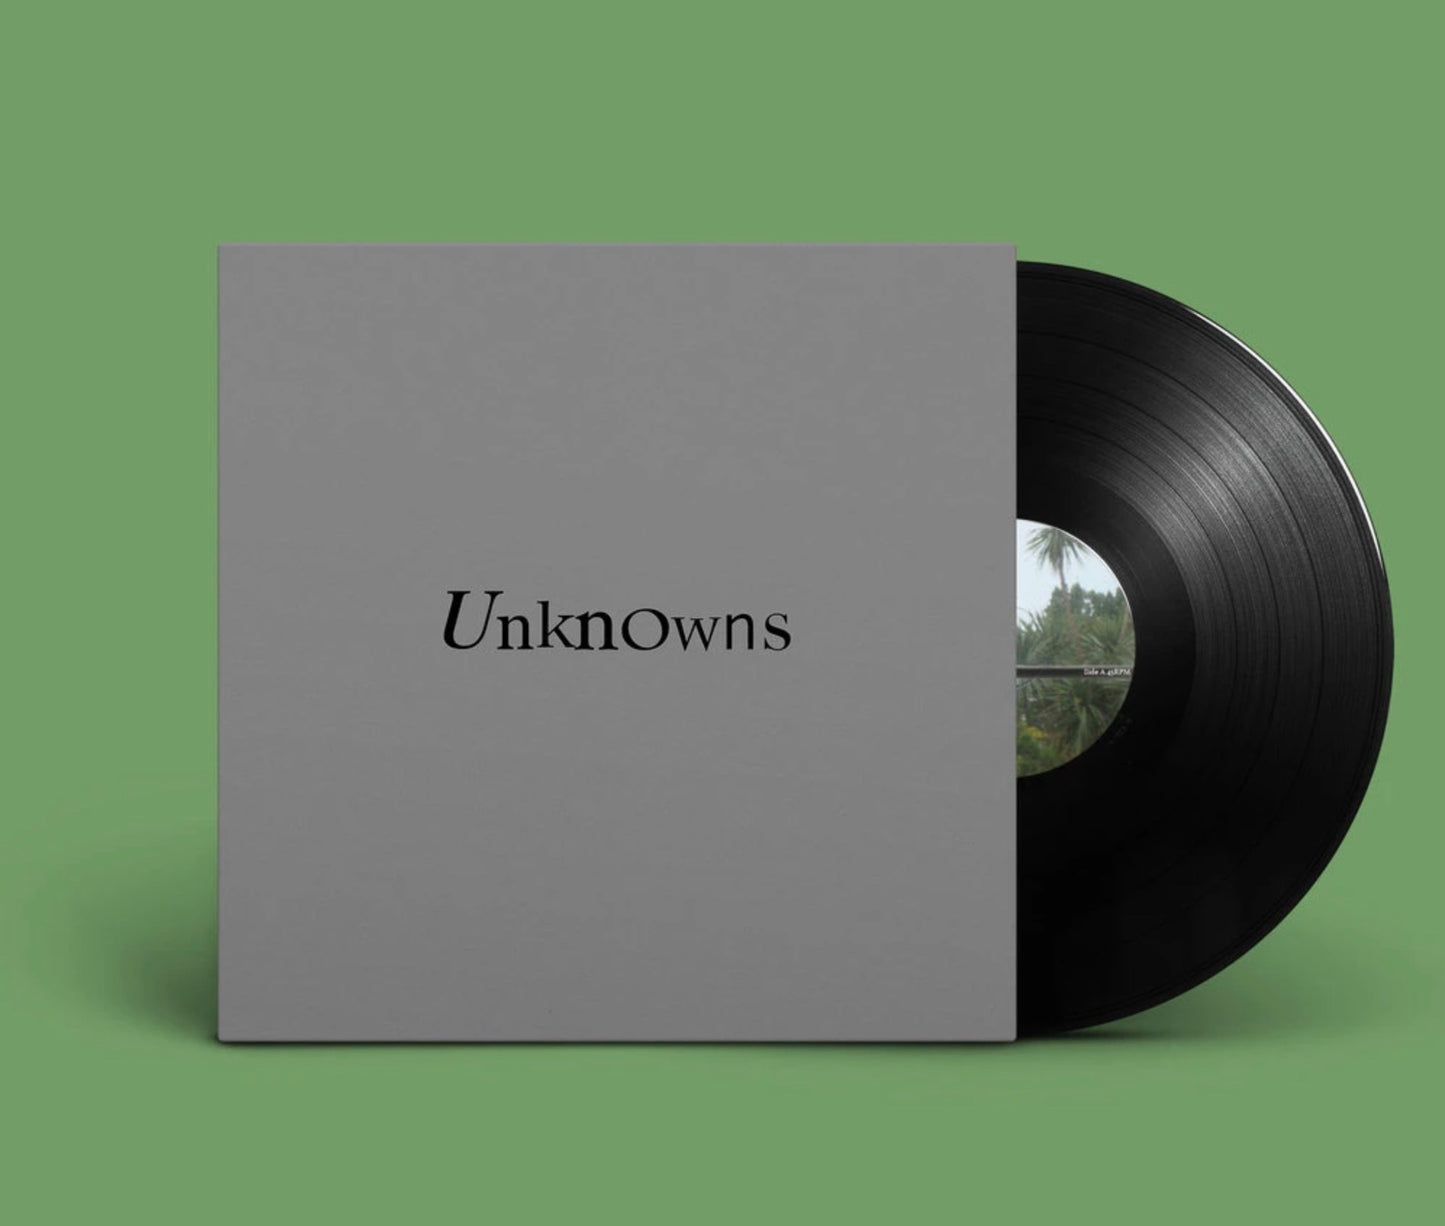 The Dead C - Unknowns | Buy on Vinyl LP